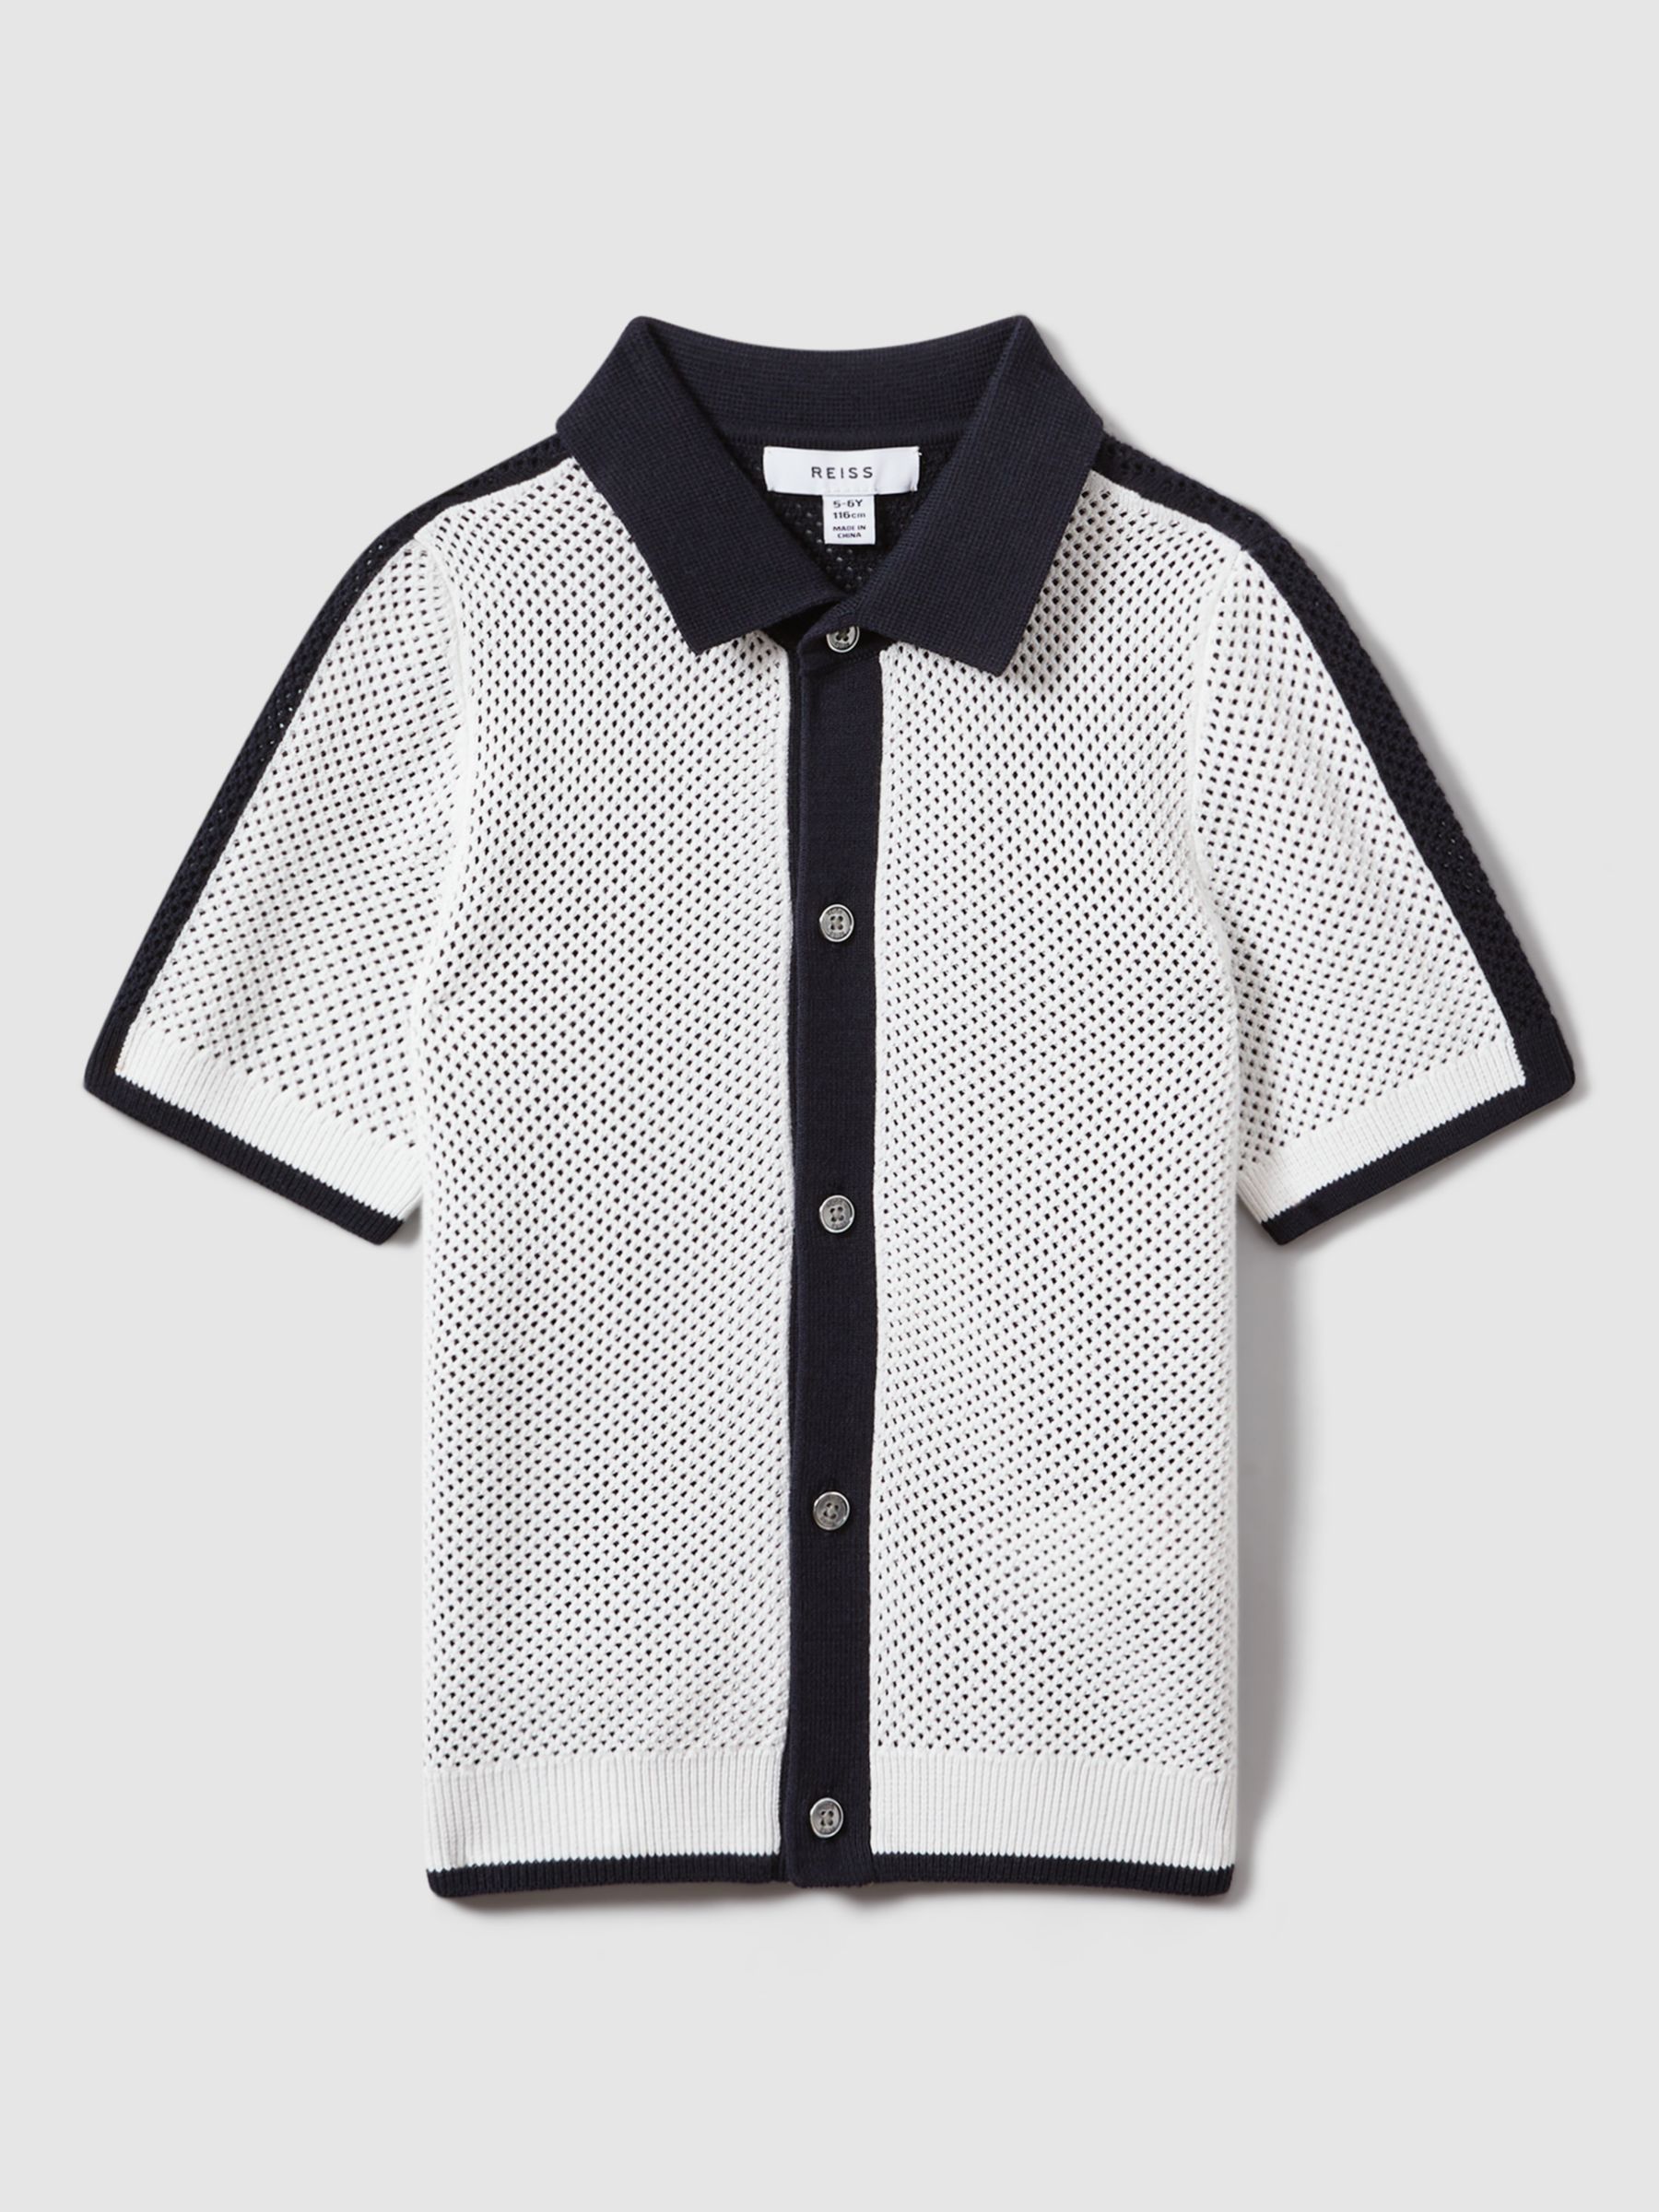 Reiss Kids' Misto Open Stitch Shirt, Navy/Optic White, 3-4 years